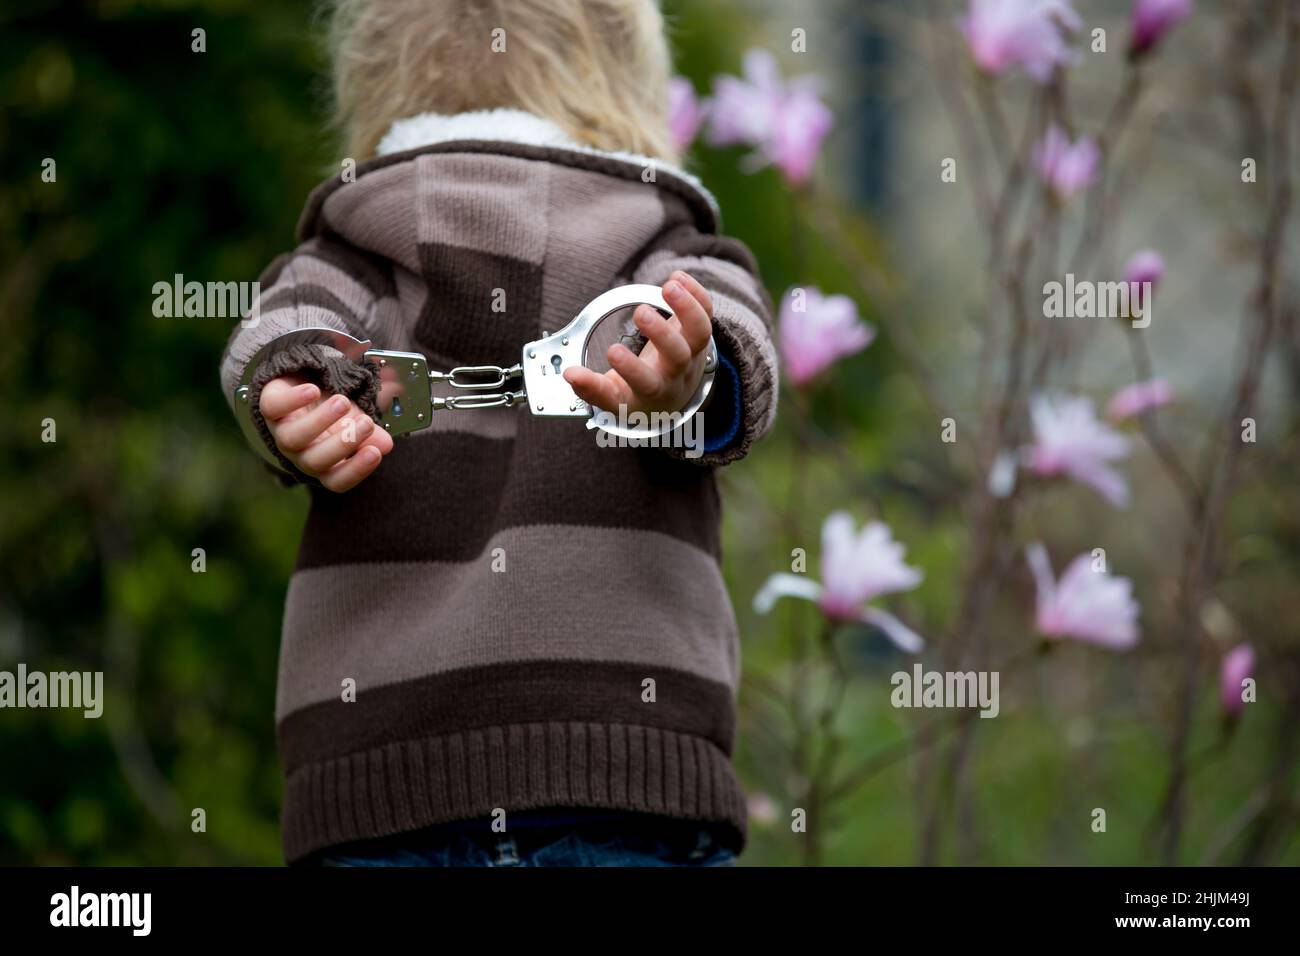 Child, boy in handcuffs, standing backwards in garden, waiting Stock Photo